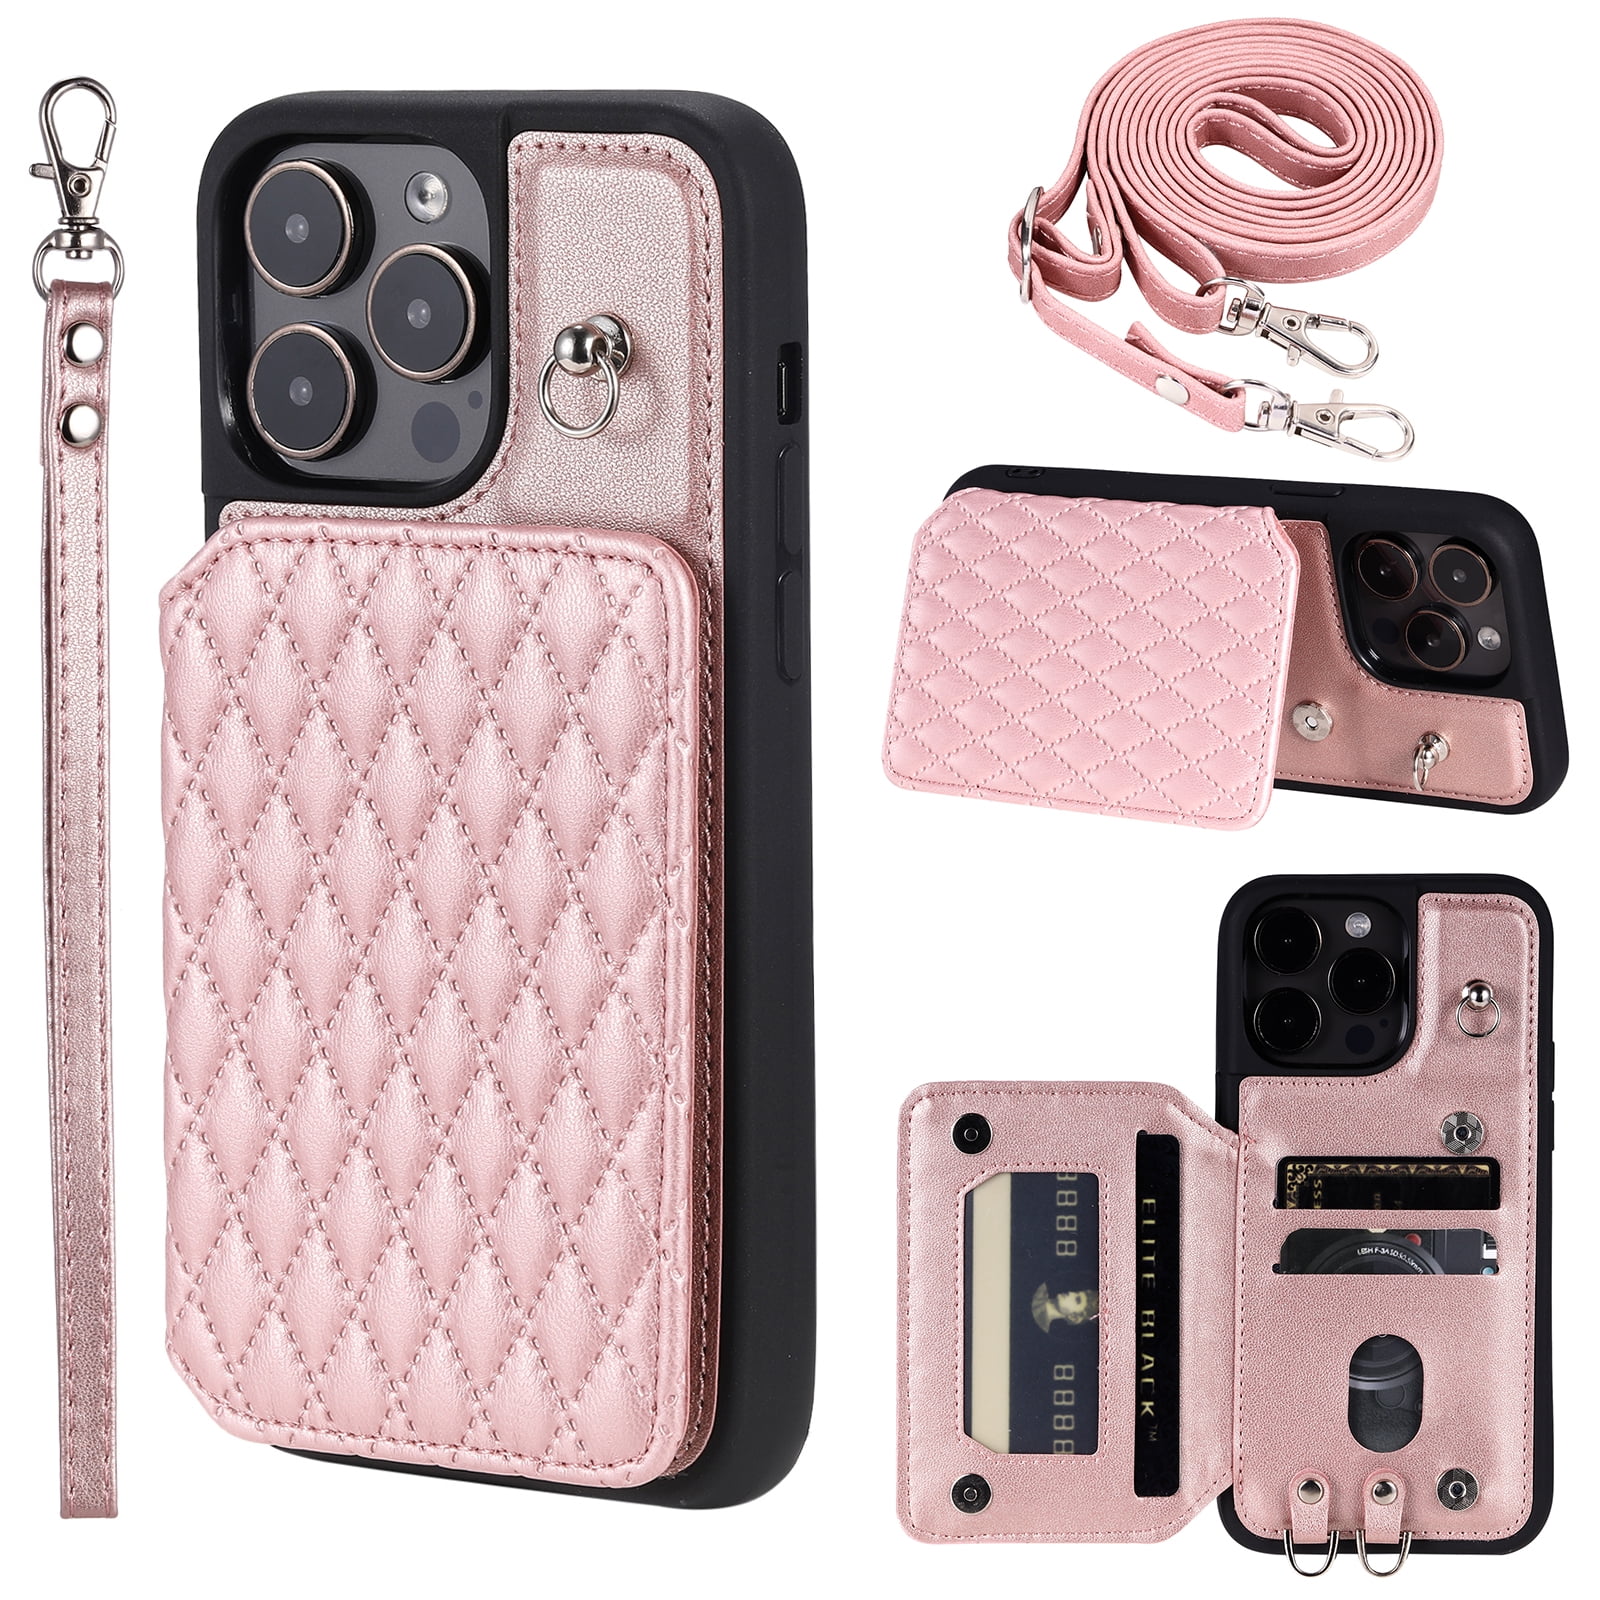 Mobile phone case/purse, chocolate